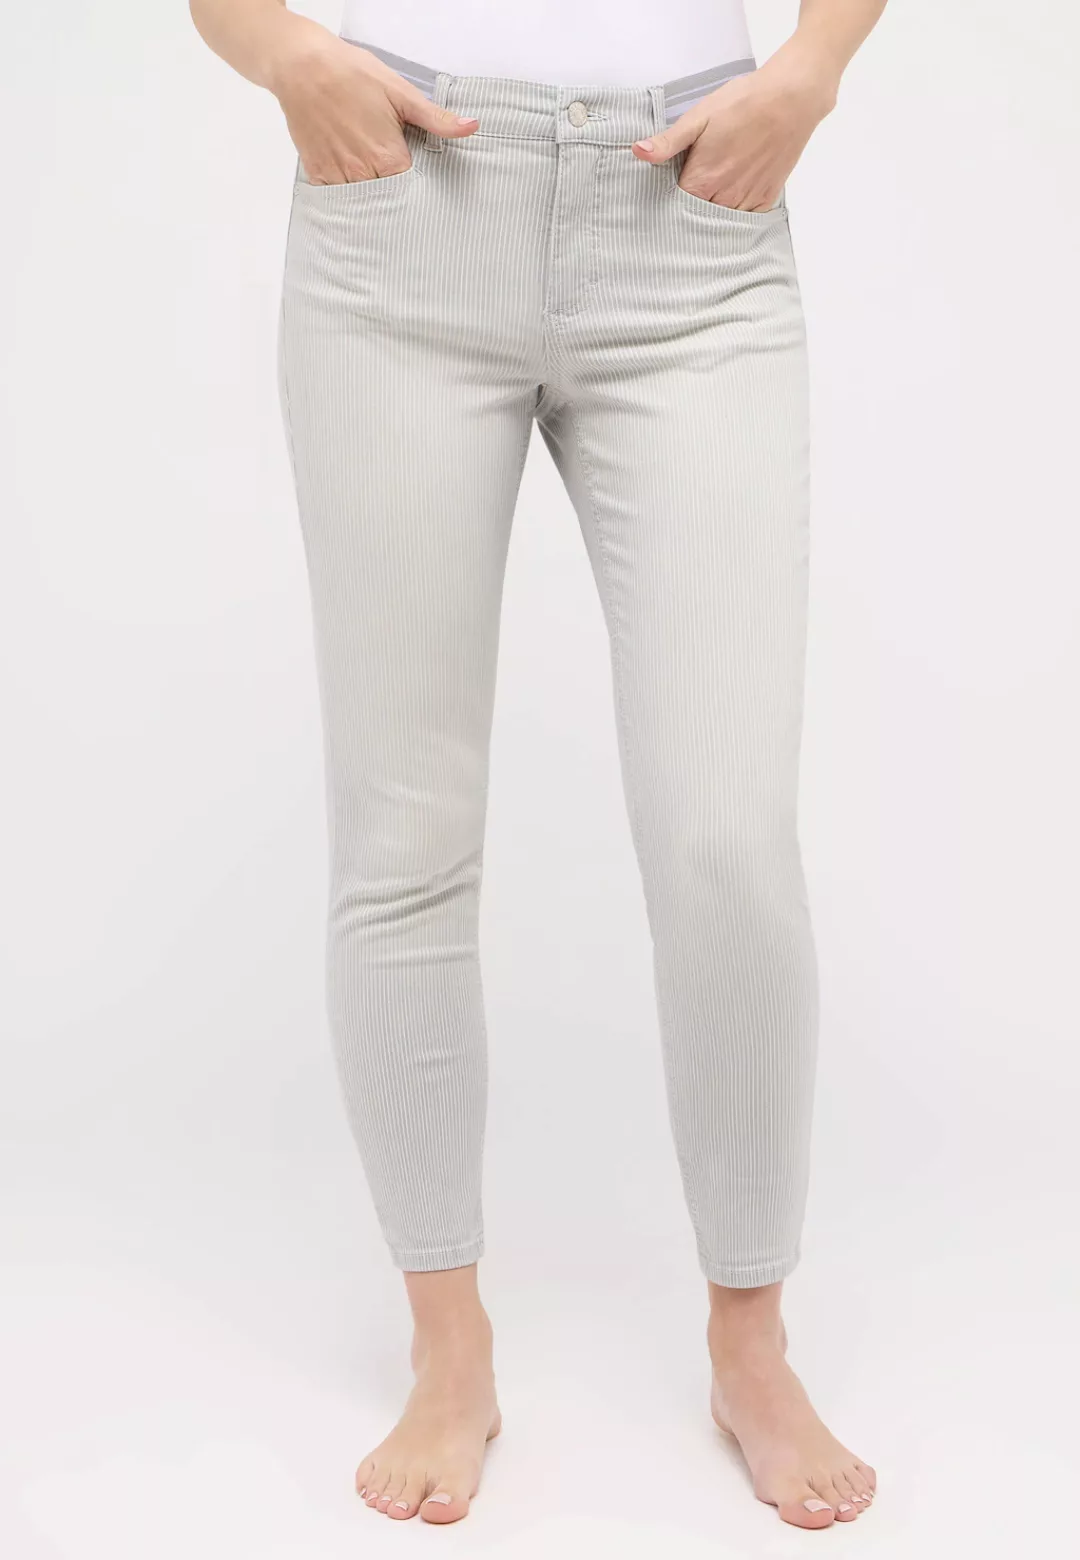 ANGELS Stretch-Jeans ANGELS JEANS ORNELLA SPORTY light grey used striped 23 günstig online kaufen